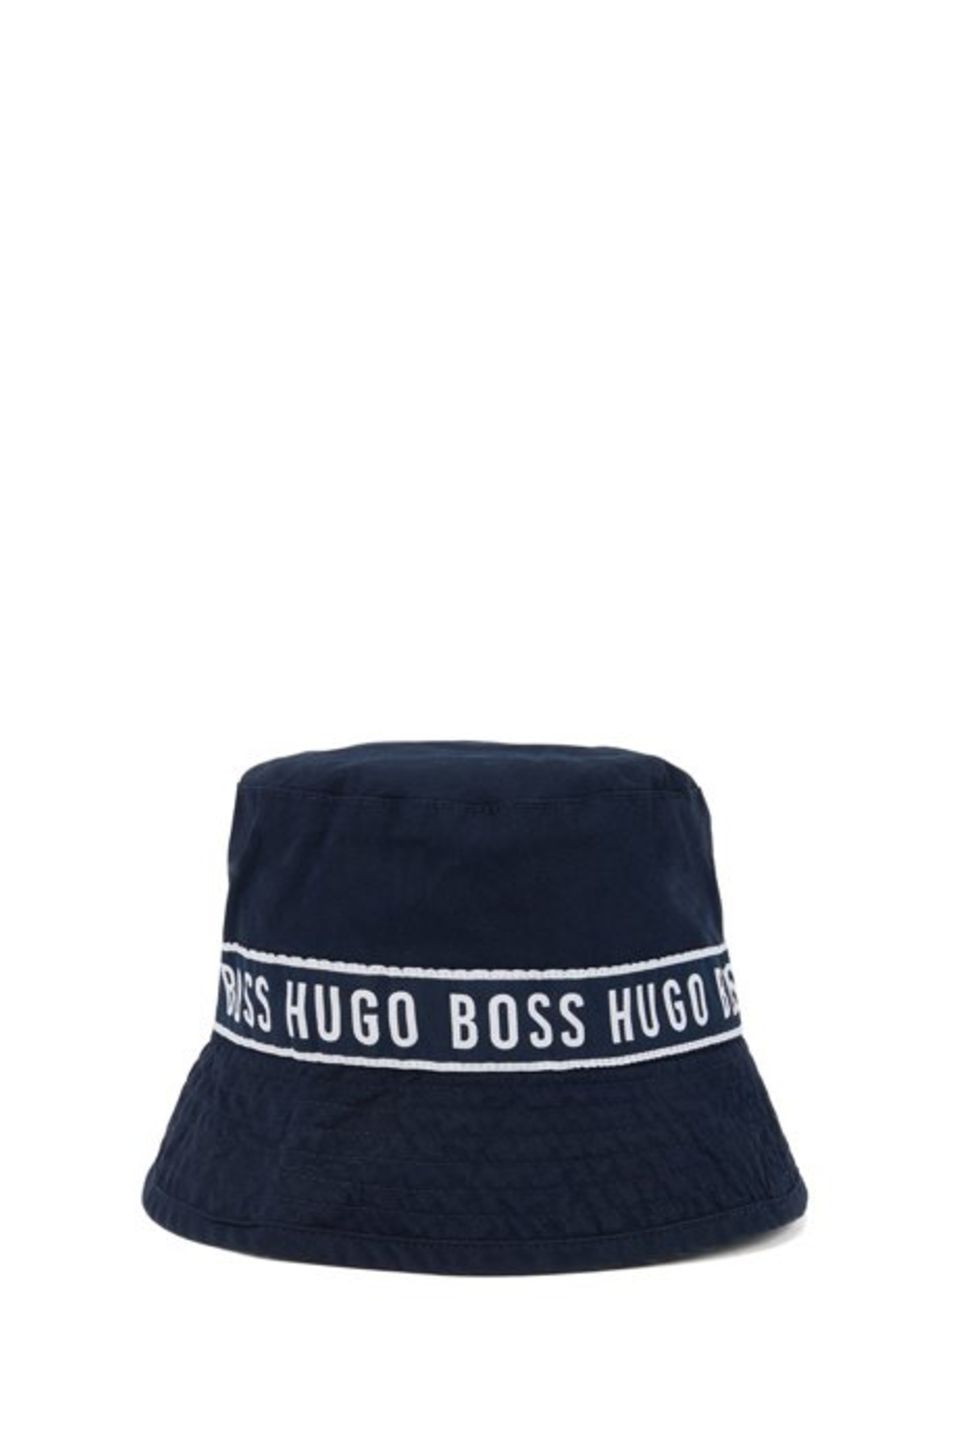 Fischerhut dunkelblau mit Hugo Boss Aufschrift